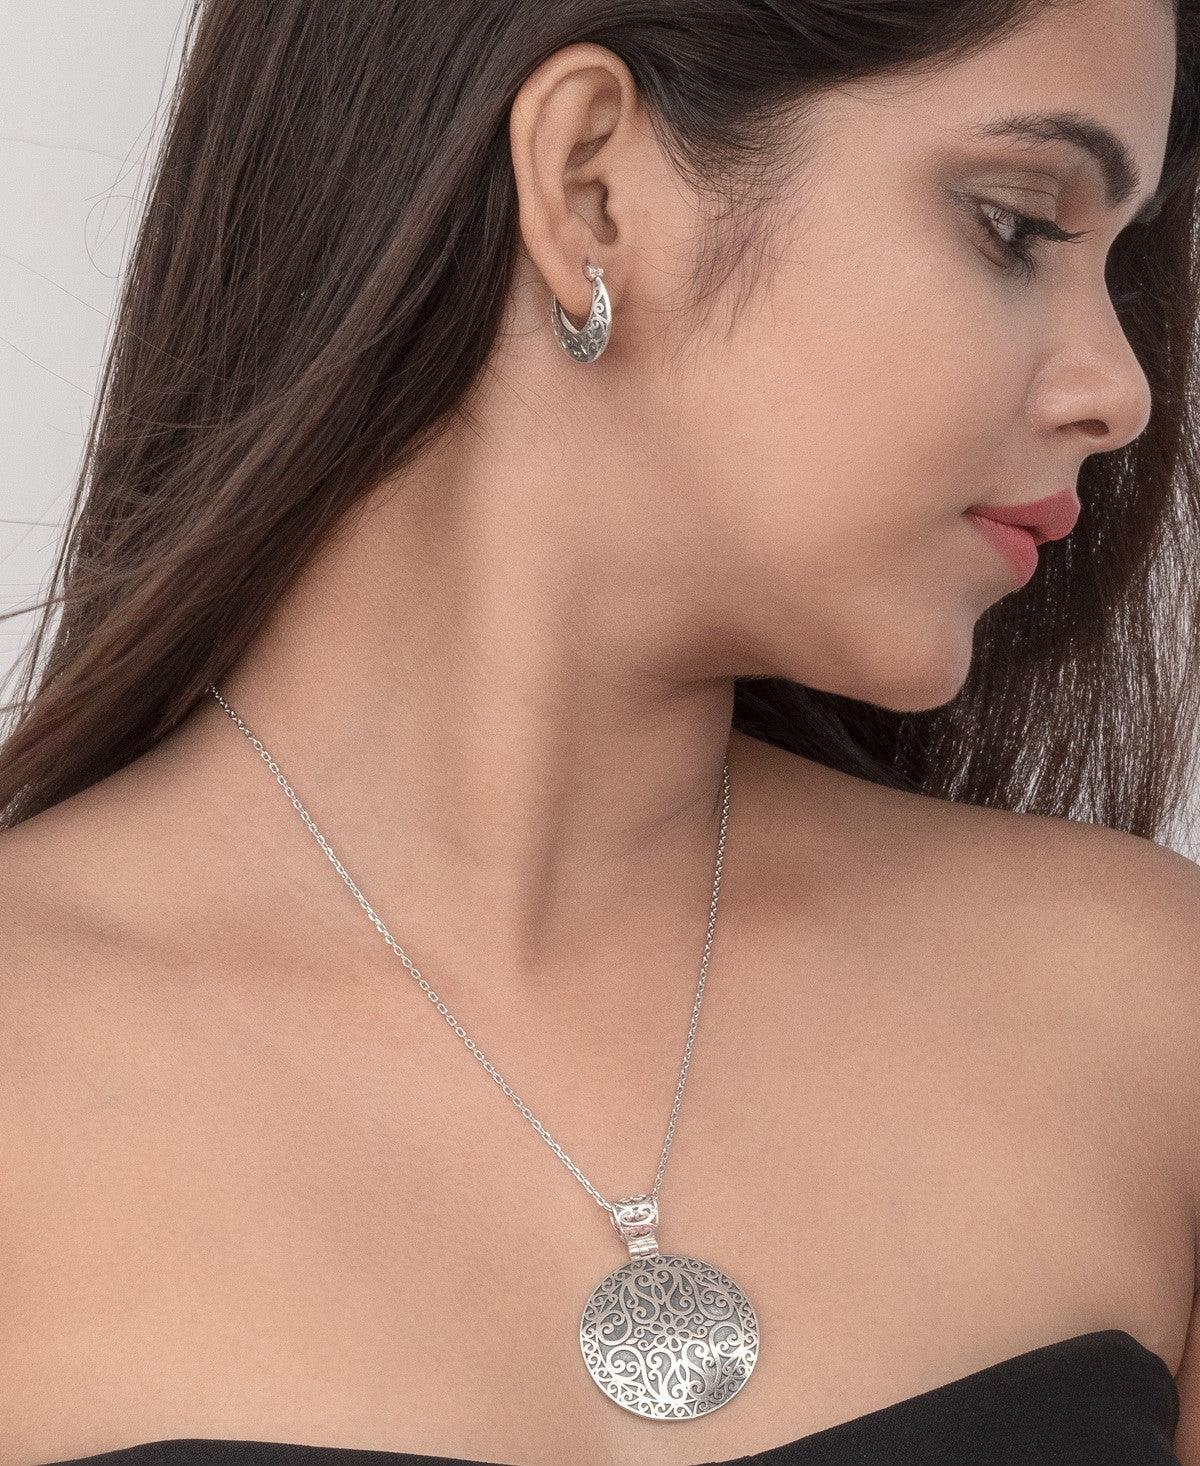 Trendy Oxidized Silver Pendant Set - Chandrani Pearls